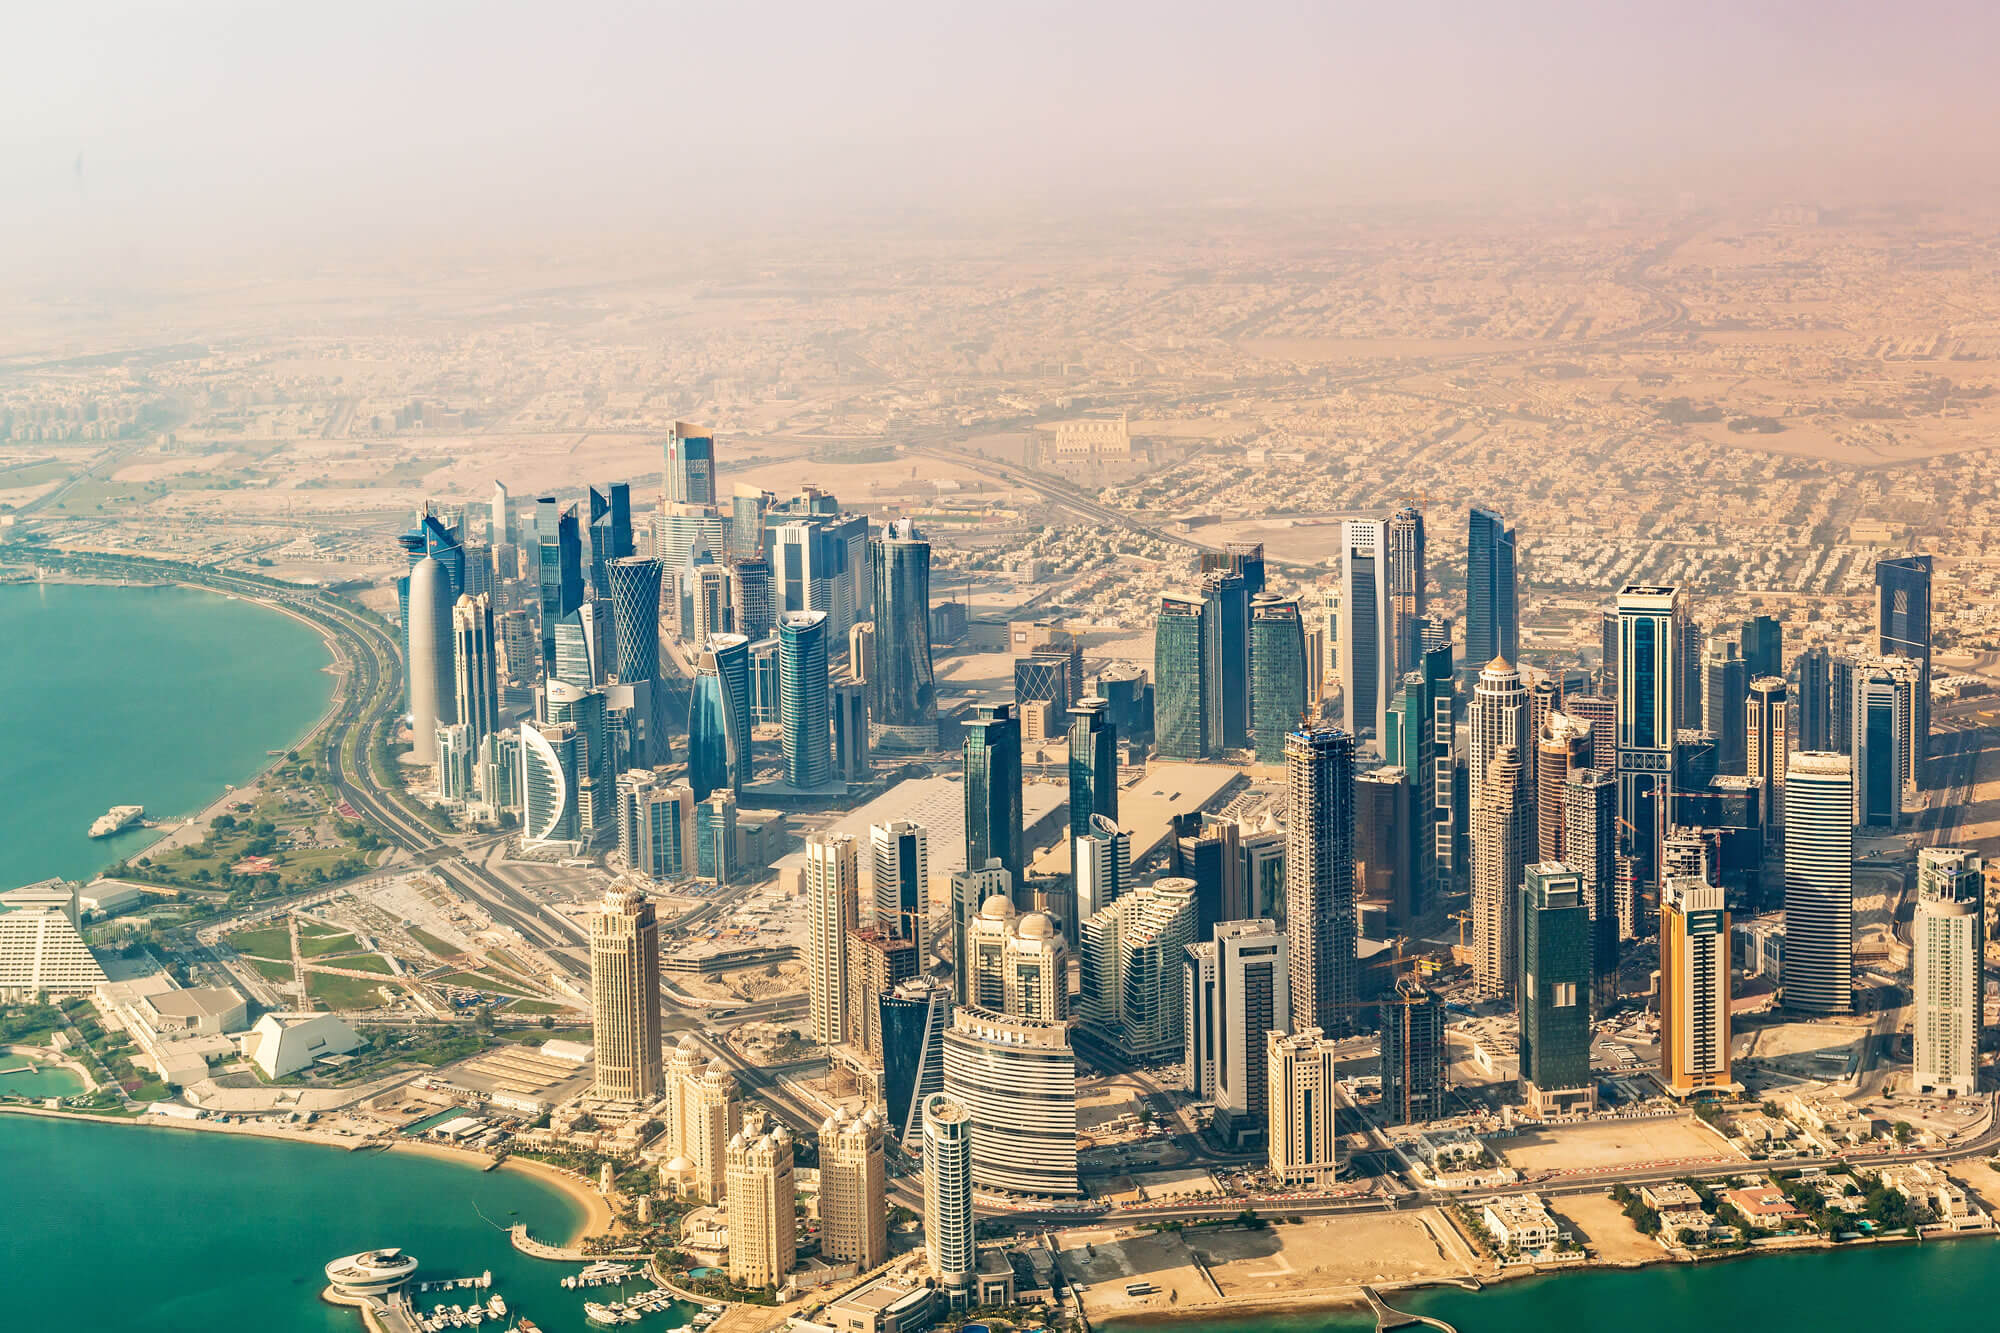 Business District of Doha, Qatar